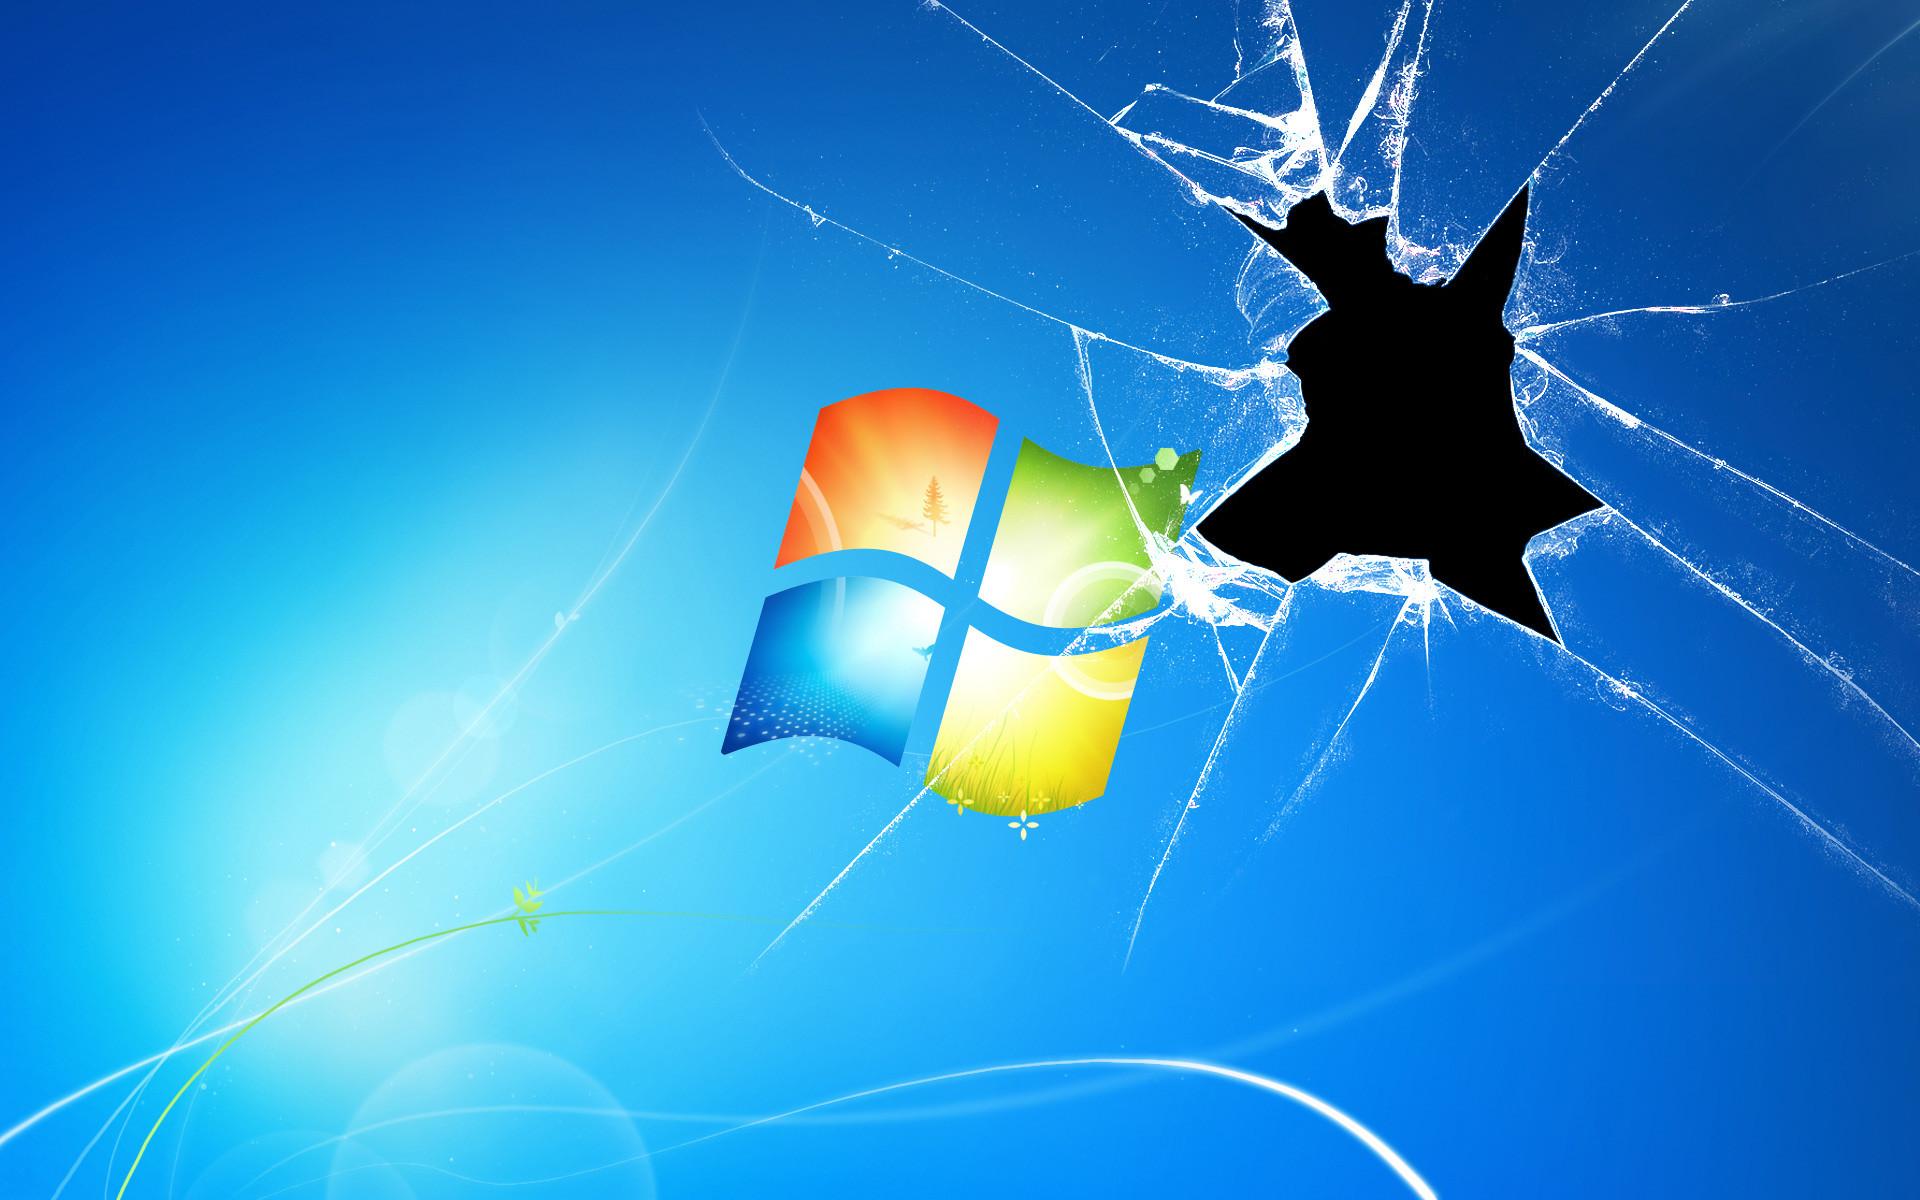 Broken Windows 7 Wallpaper